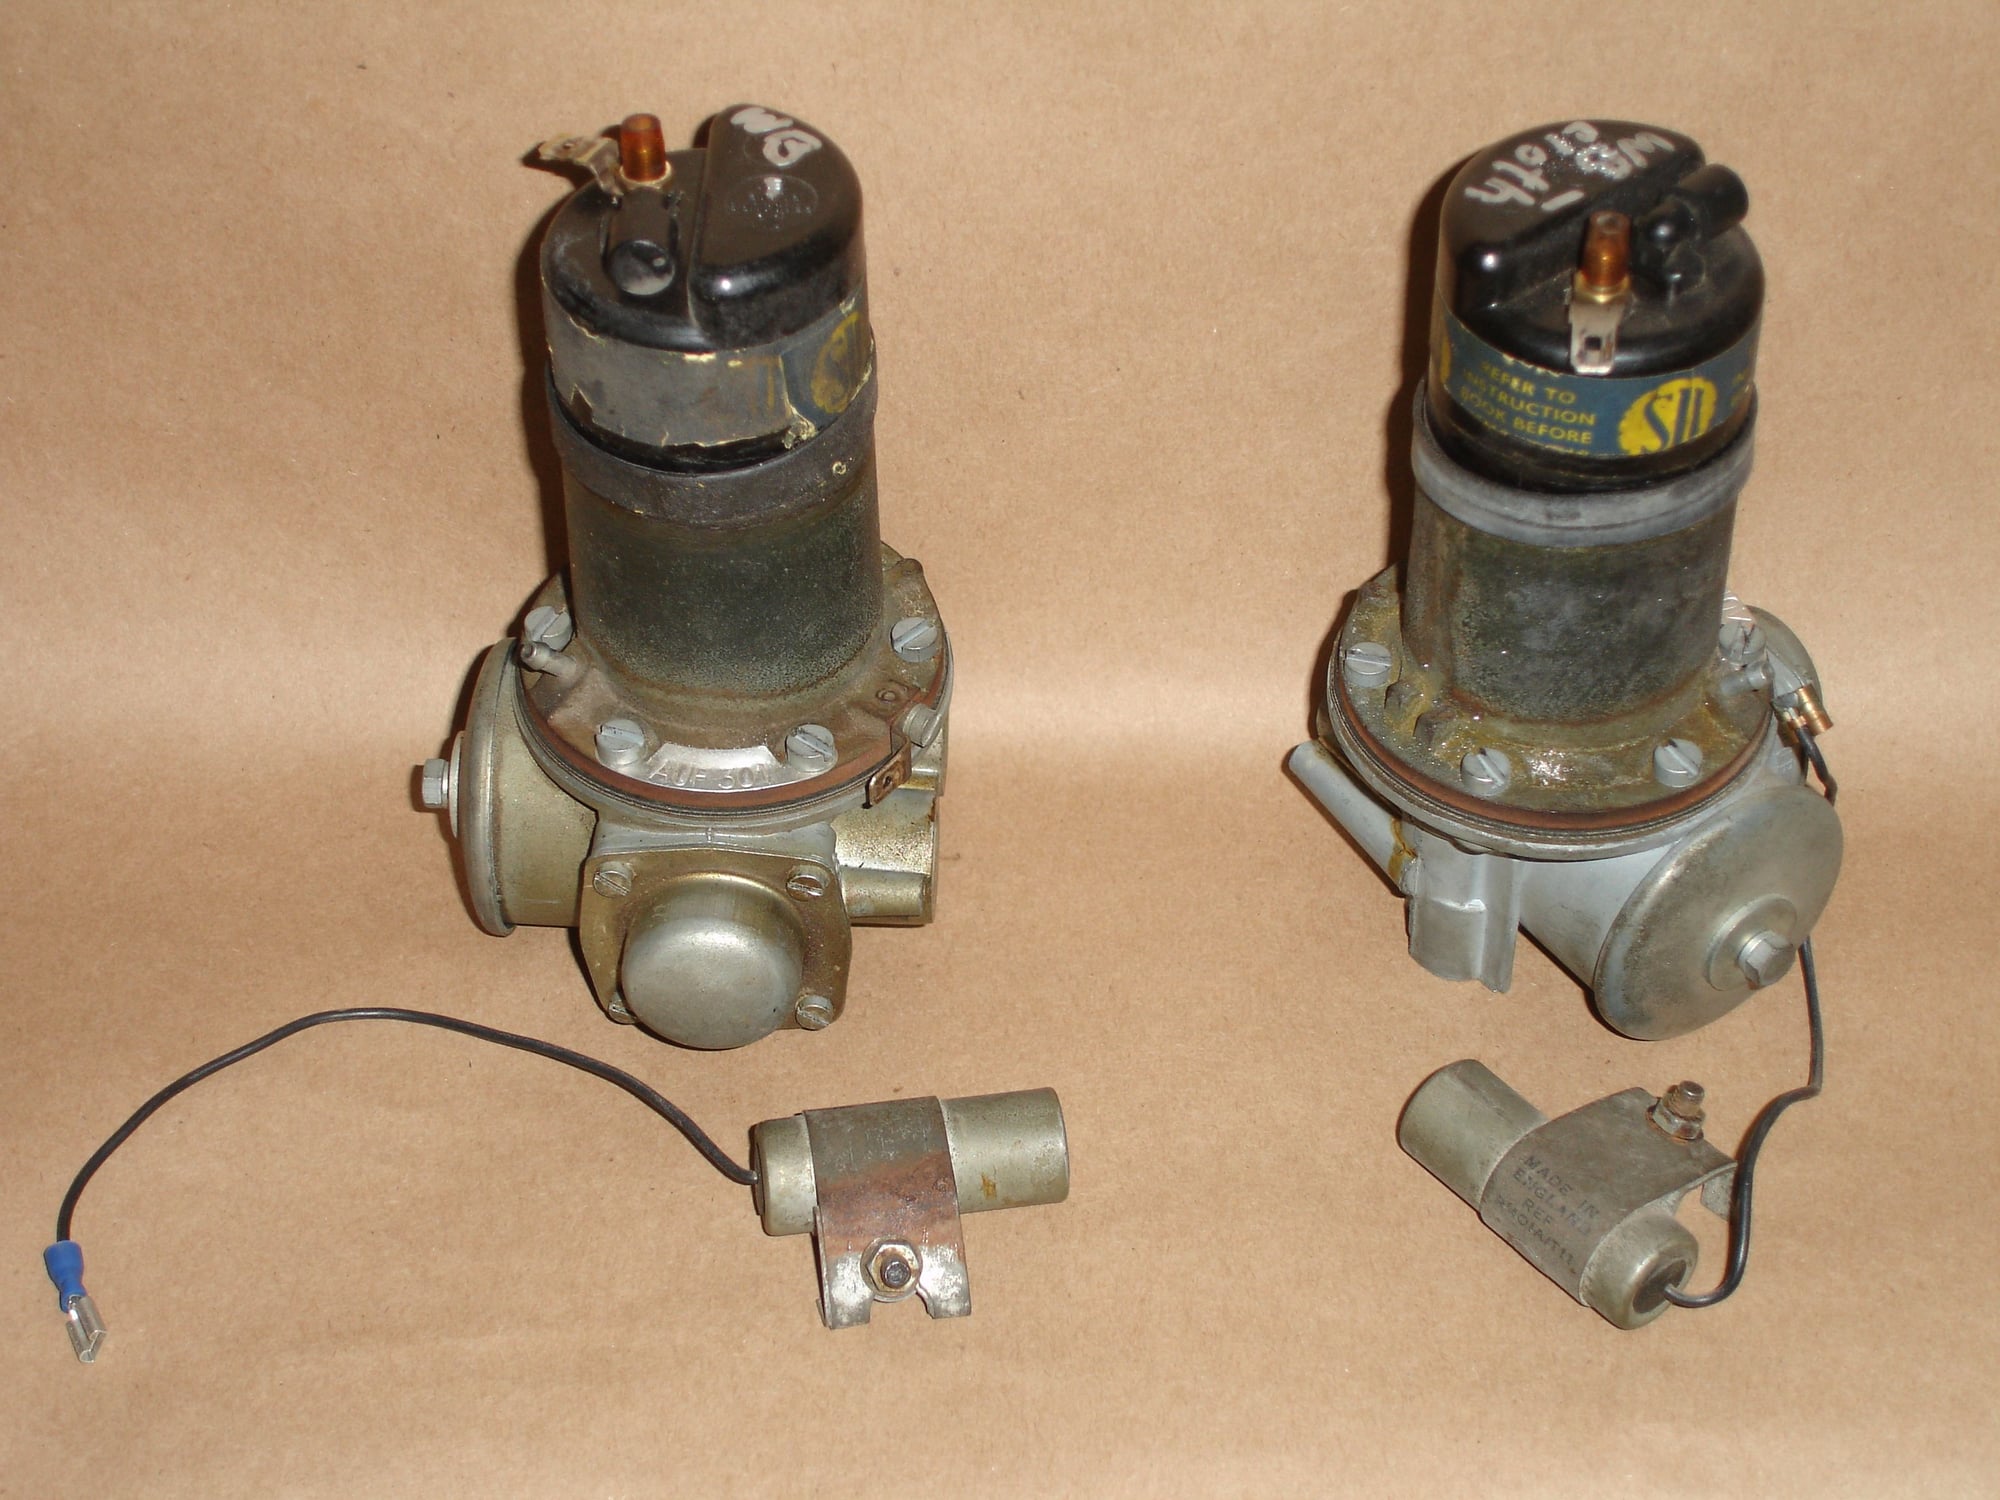 2011 Acura MDX - SU AZX-1307 pumps,  Lucas FT 6 5-3/4" headlights, stock air filter housing - Sahuarita, AZ 85629, United States